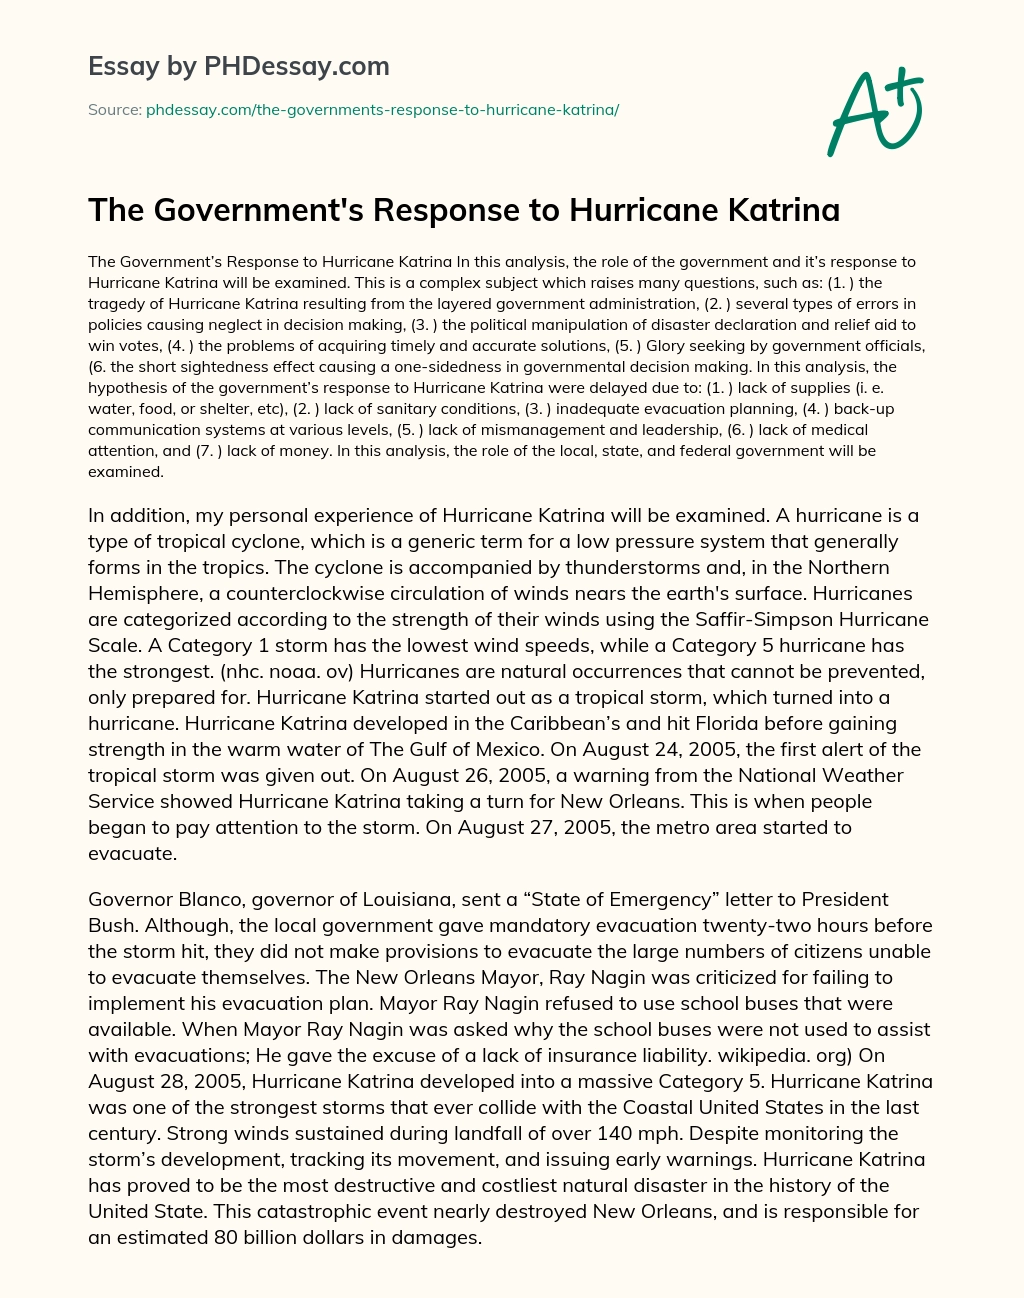 The Government’s Response to Hurricane Katrina essay